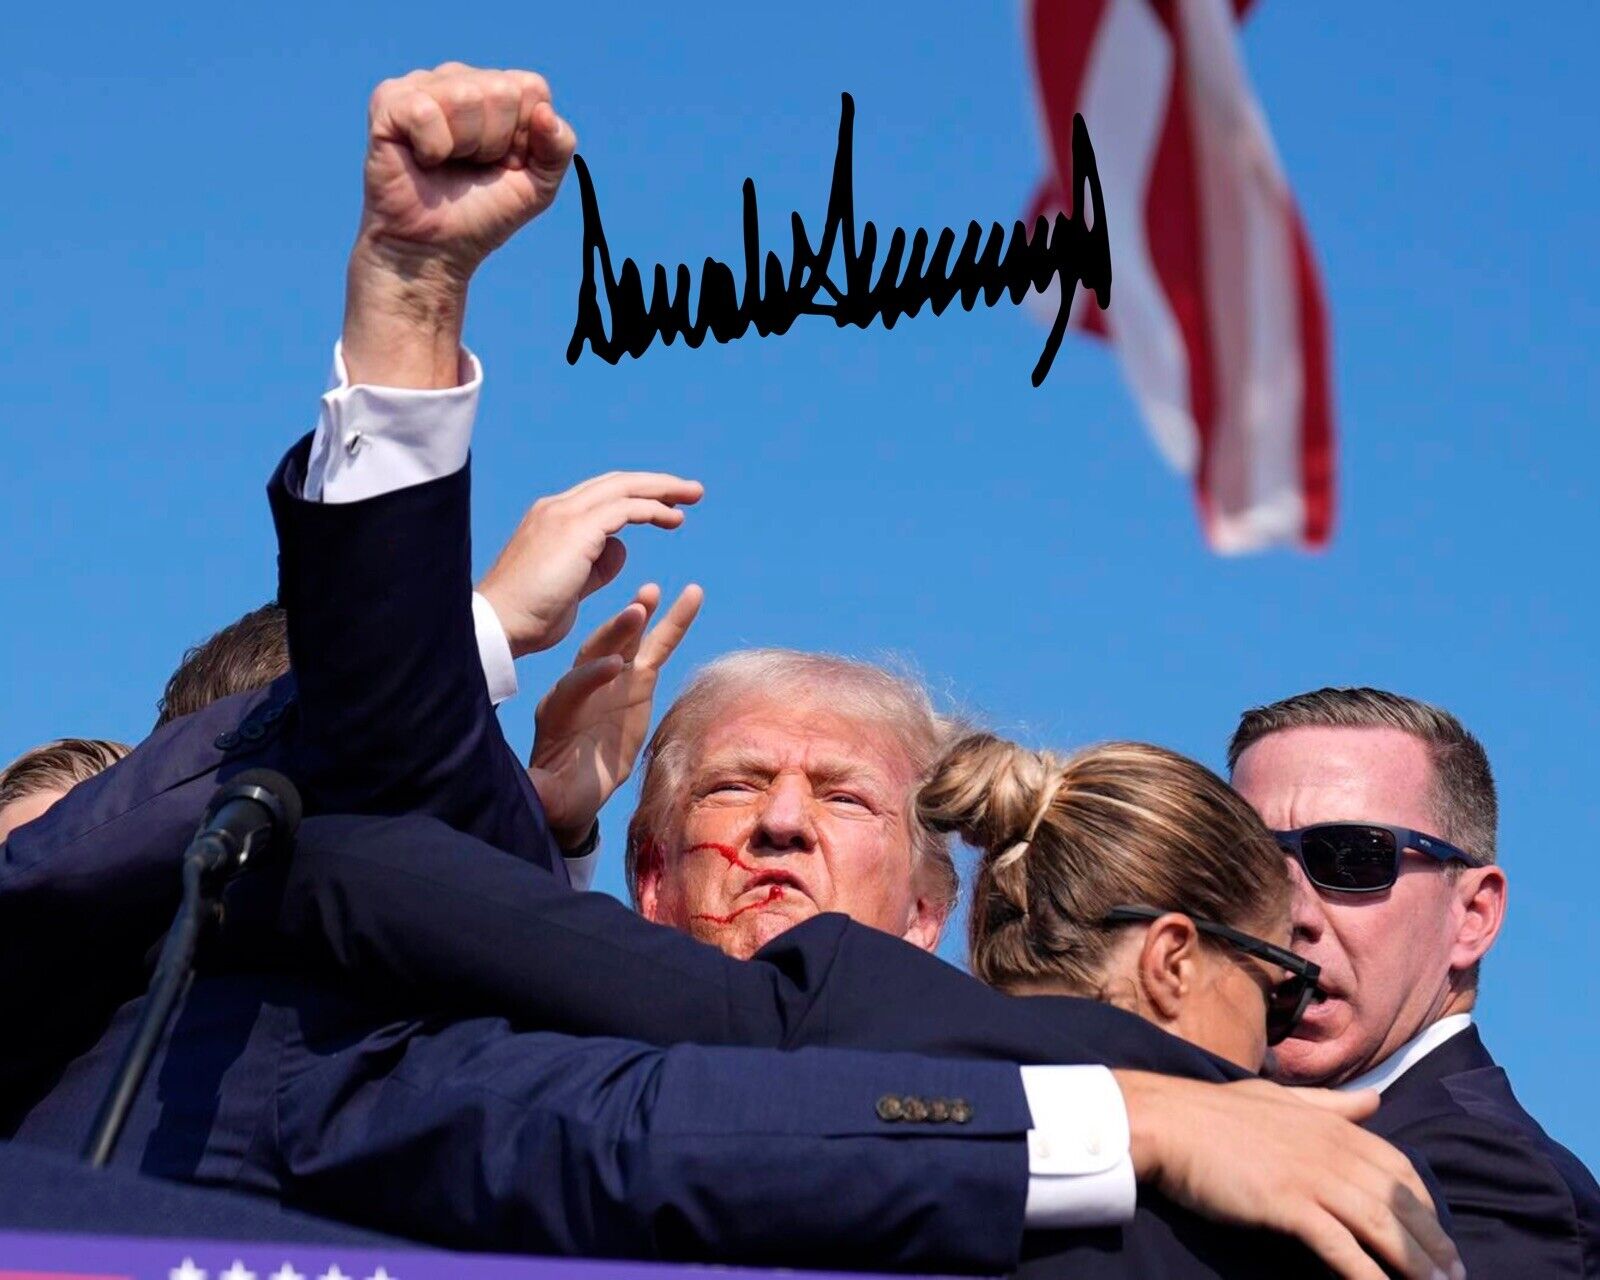 8x10 Framed Photograph of Donald Trump’s Defiant Response W/ Digital Autograph